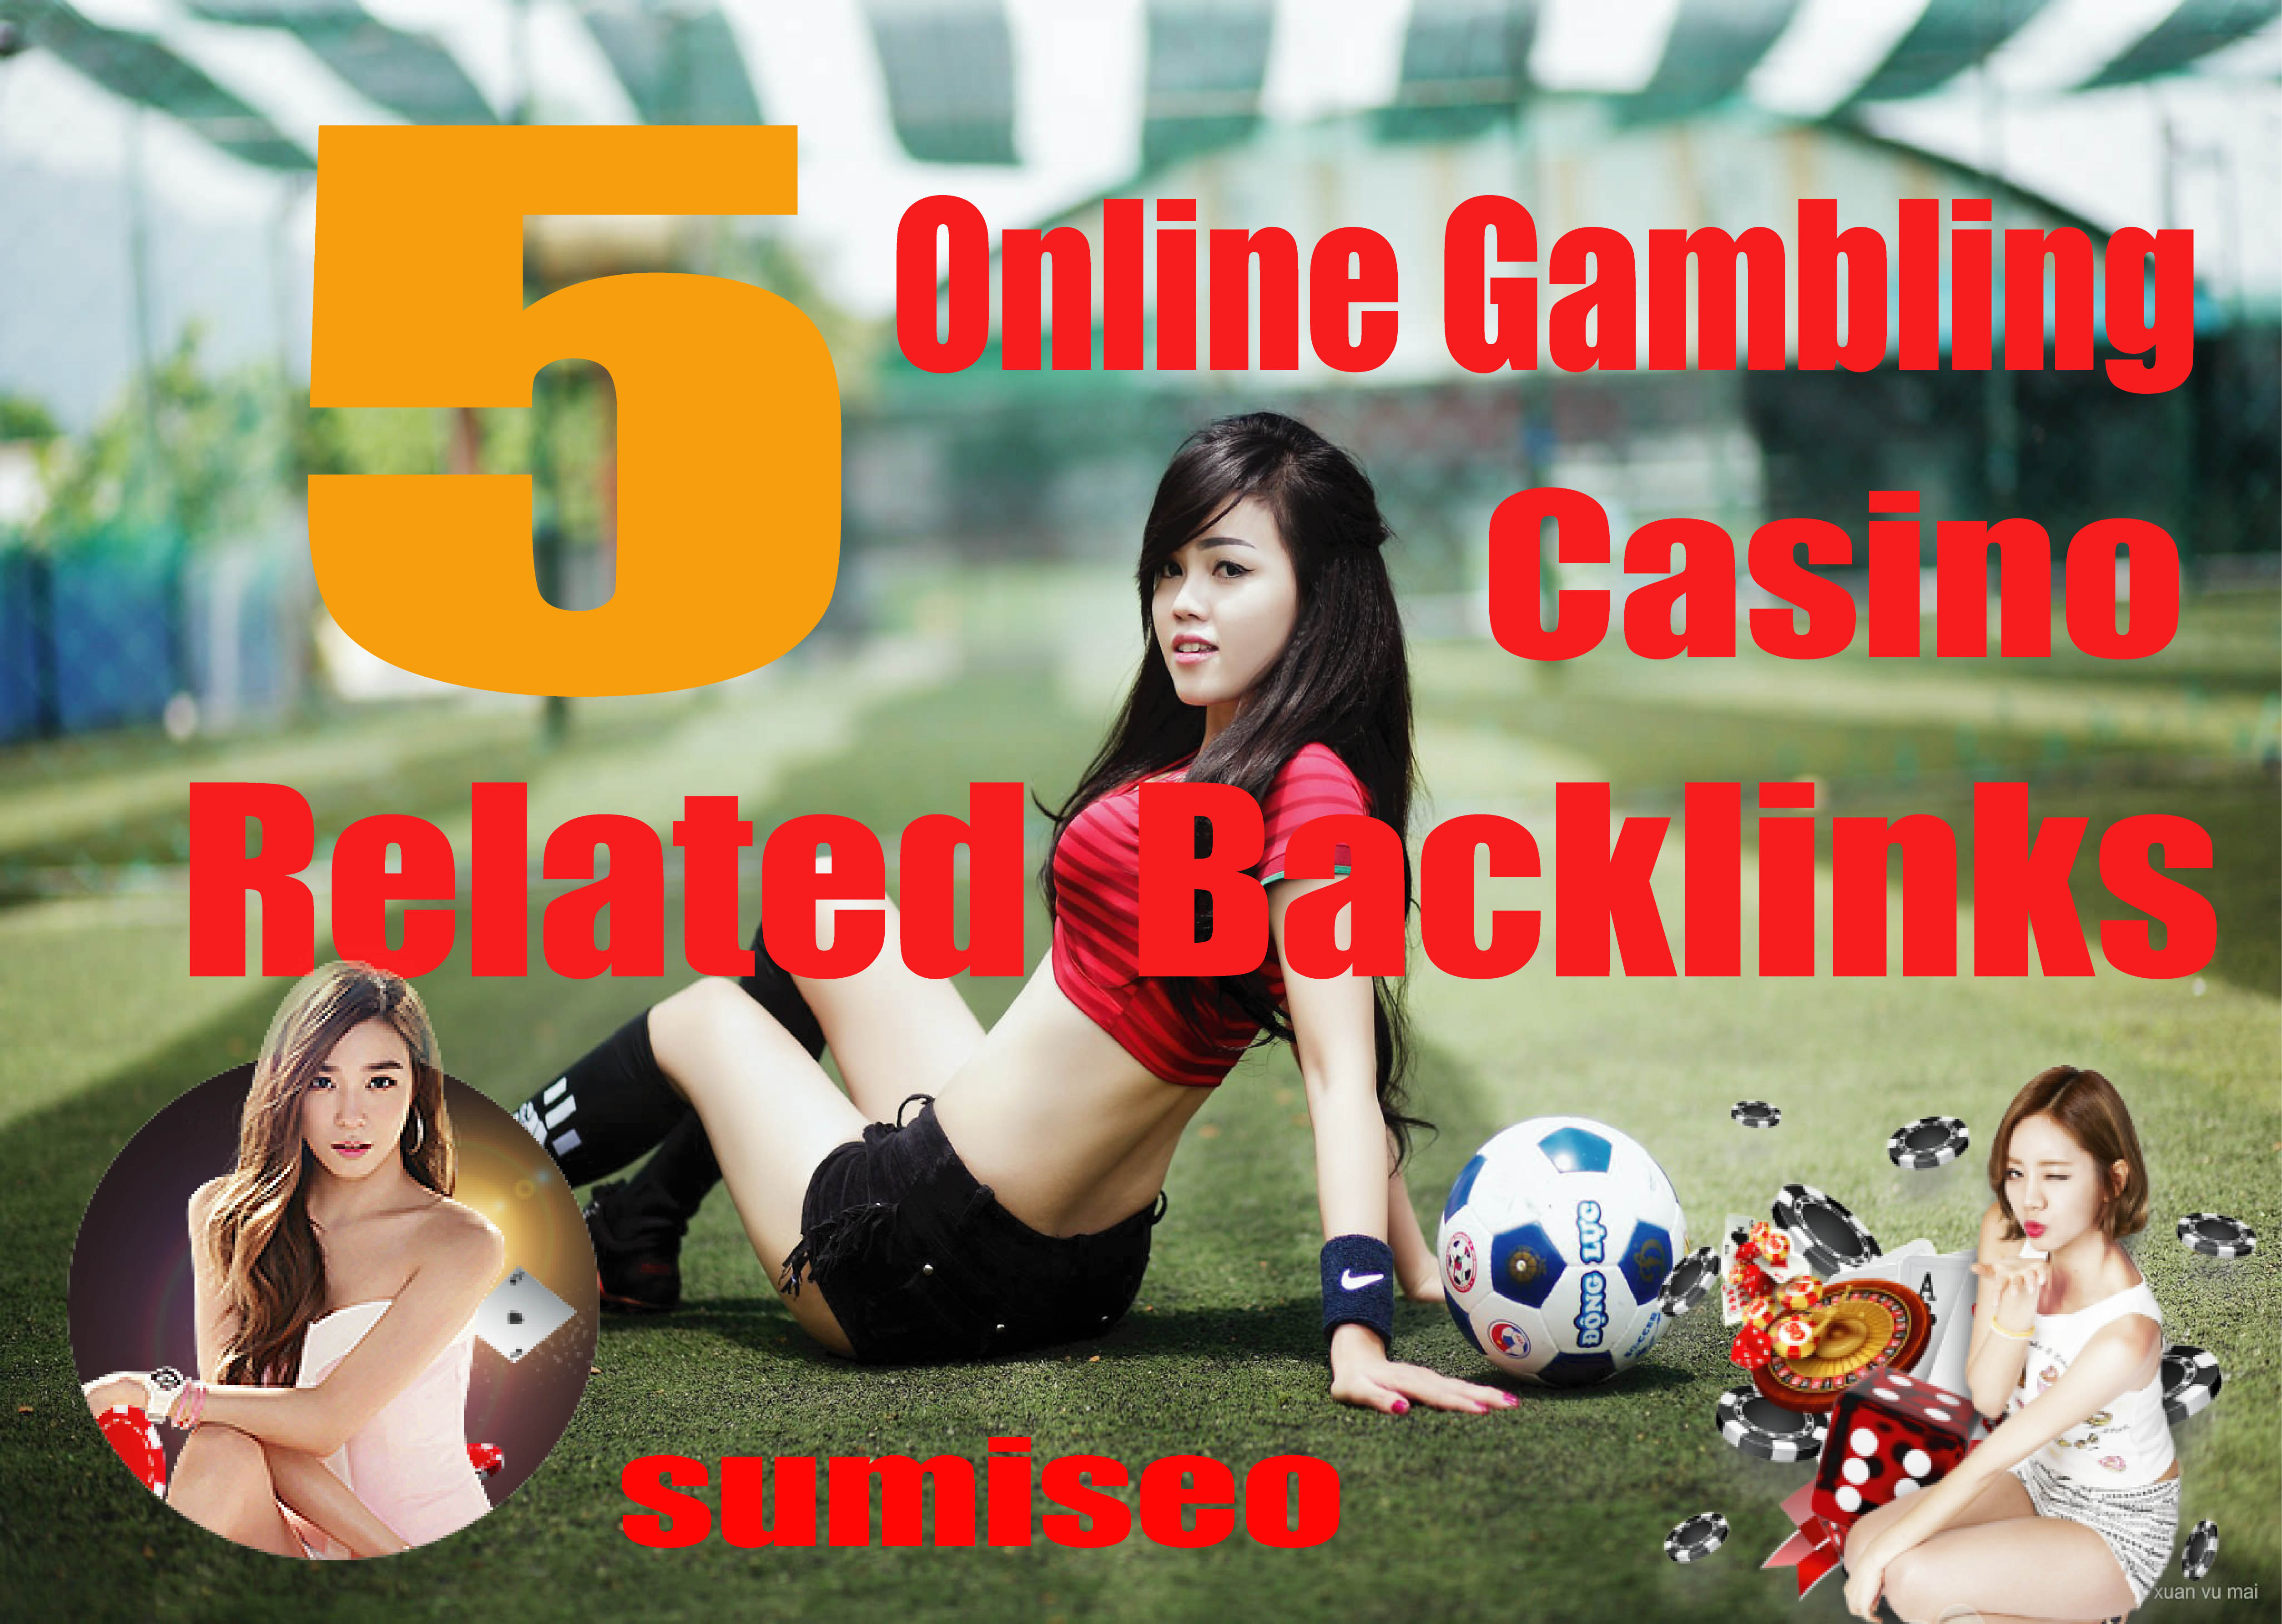 5 Casino PBN Links- Casino / Gambling / Poker / Betting / sports sites 